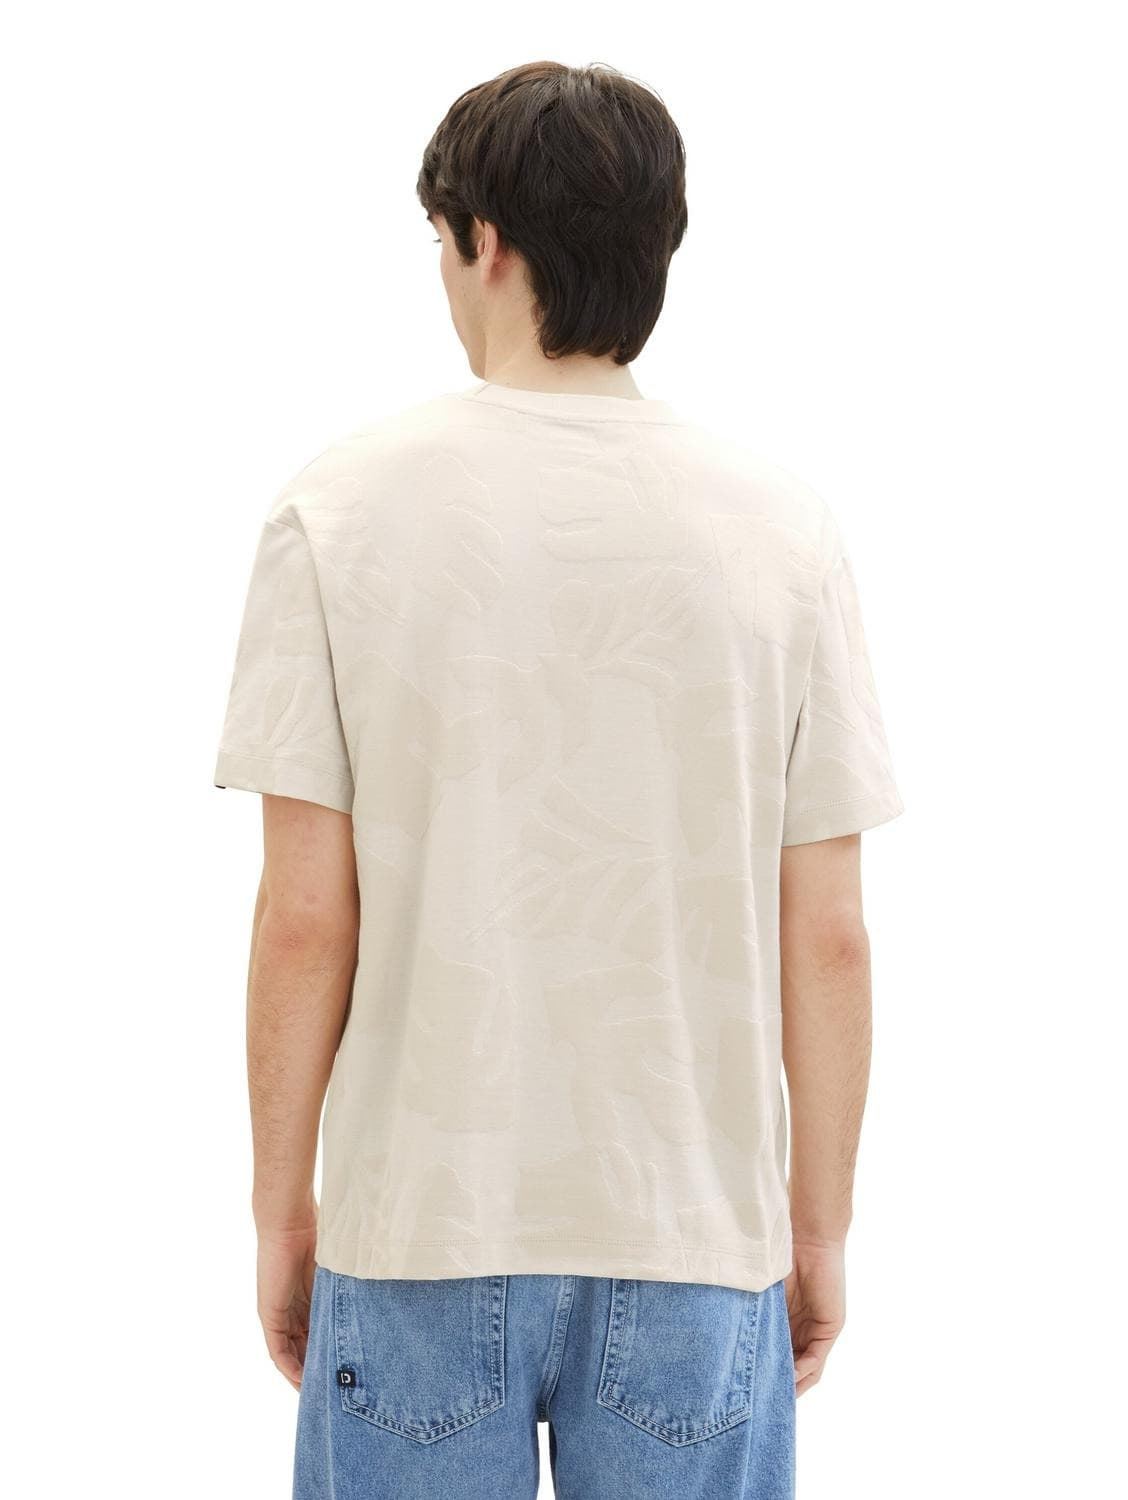 Camiseta Tom Tailor 1040870 35003 beige leaves jacquard - Imagen 2